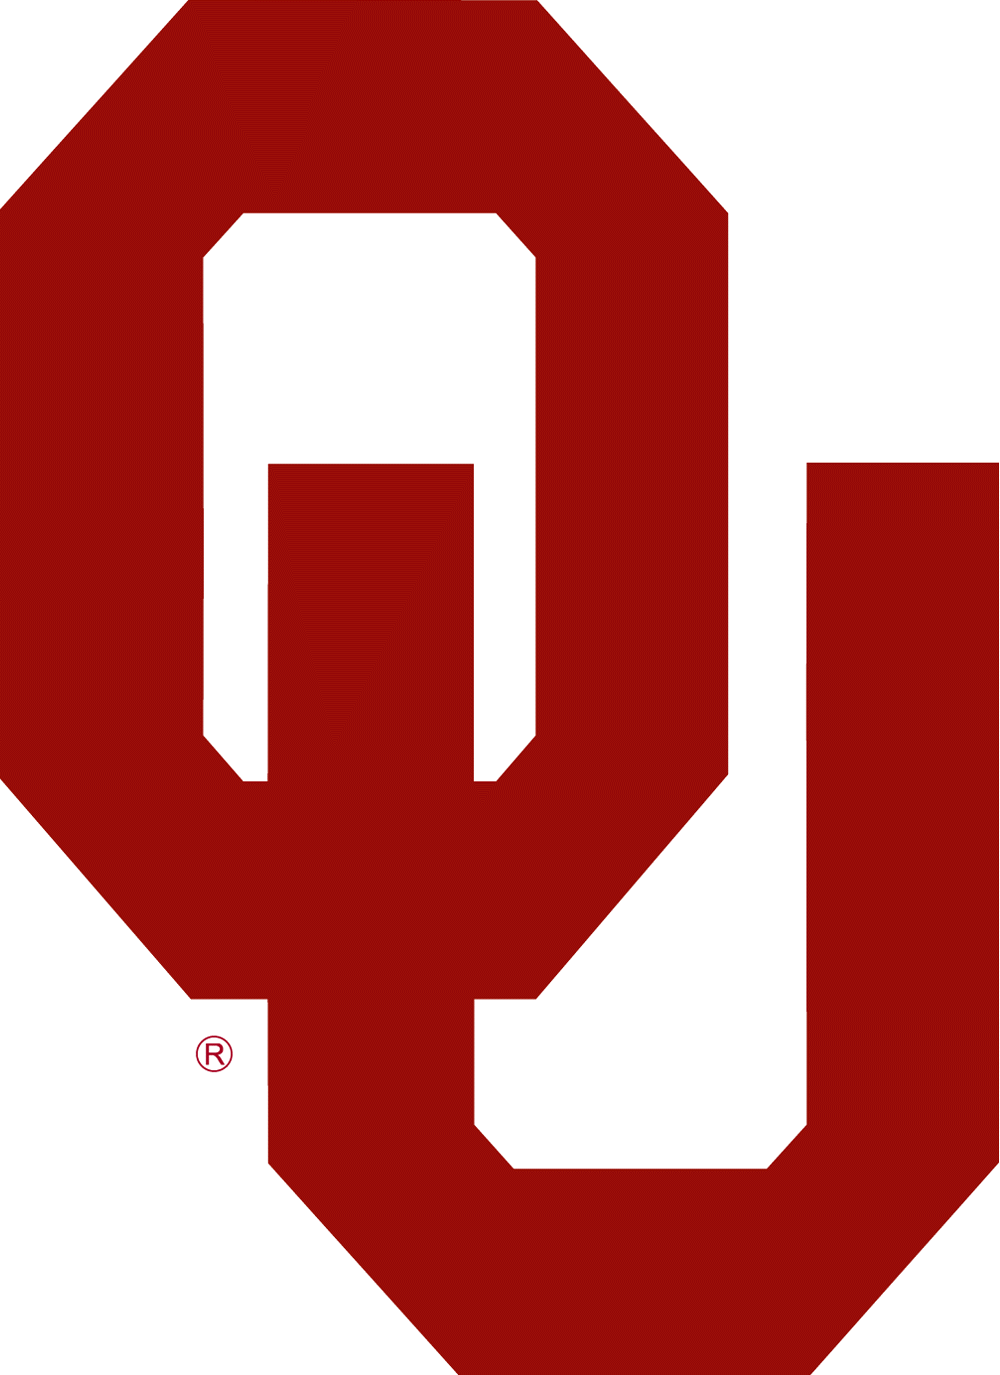 Oklahoma S Official Logo Is Also Available Asvector Artwork  Eps Files